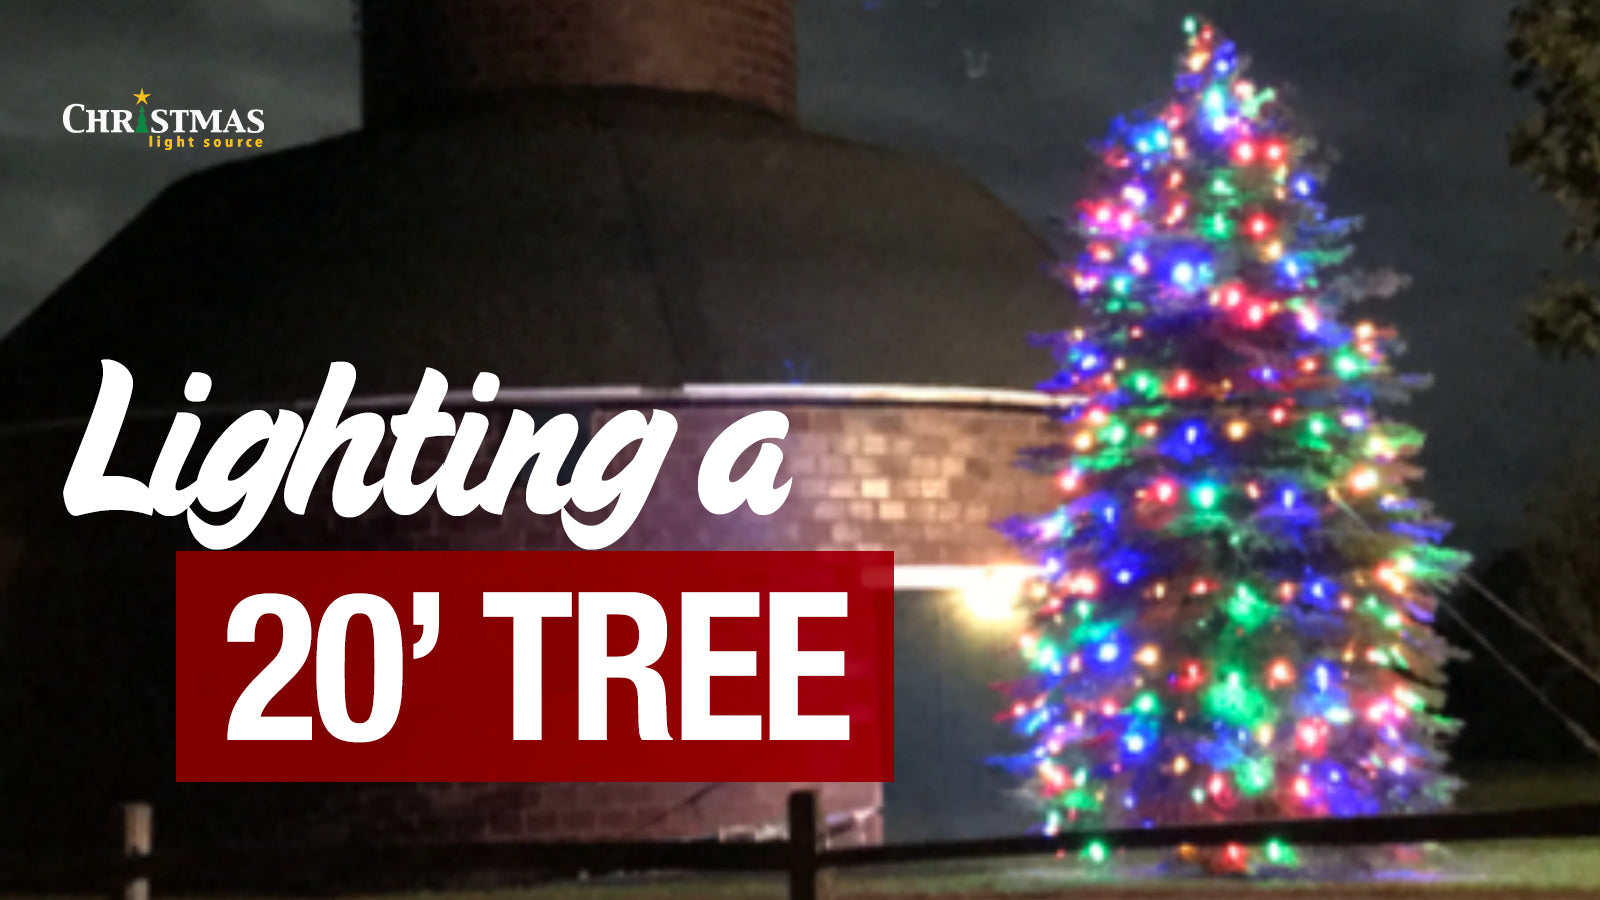 Get This Look: Lighting a 20-foot tree